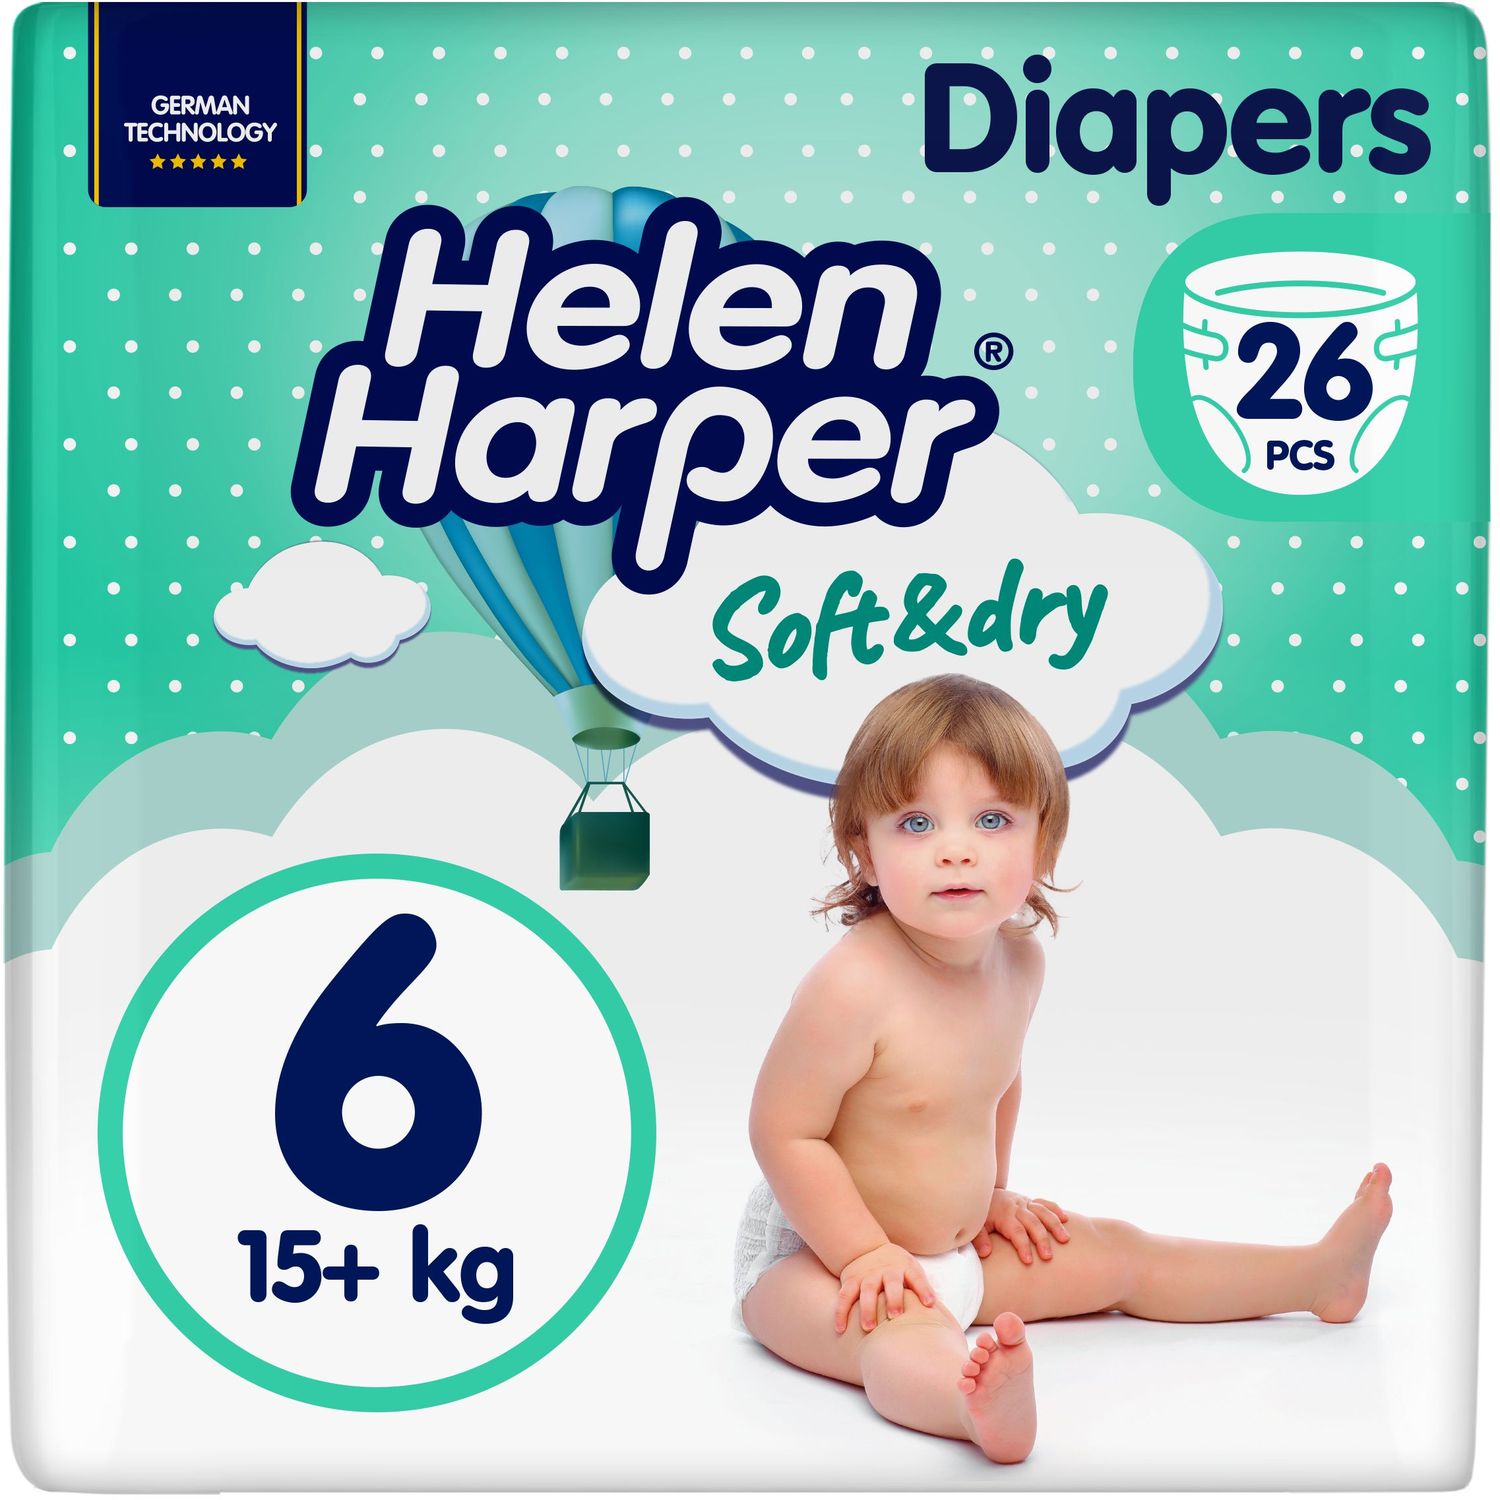 Підгузки Helen Harper Soft & Dry New XL (6) 15+ кг 26 шт. - фото 1